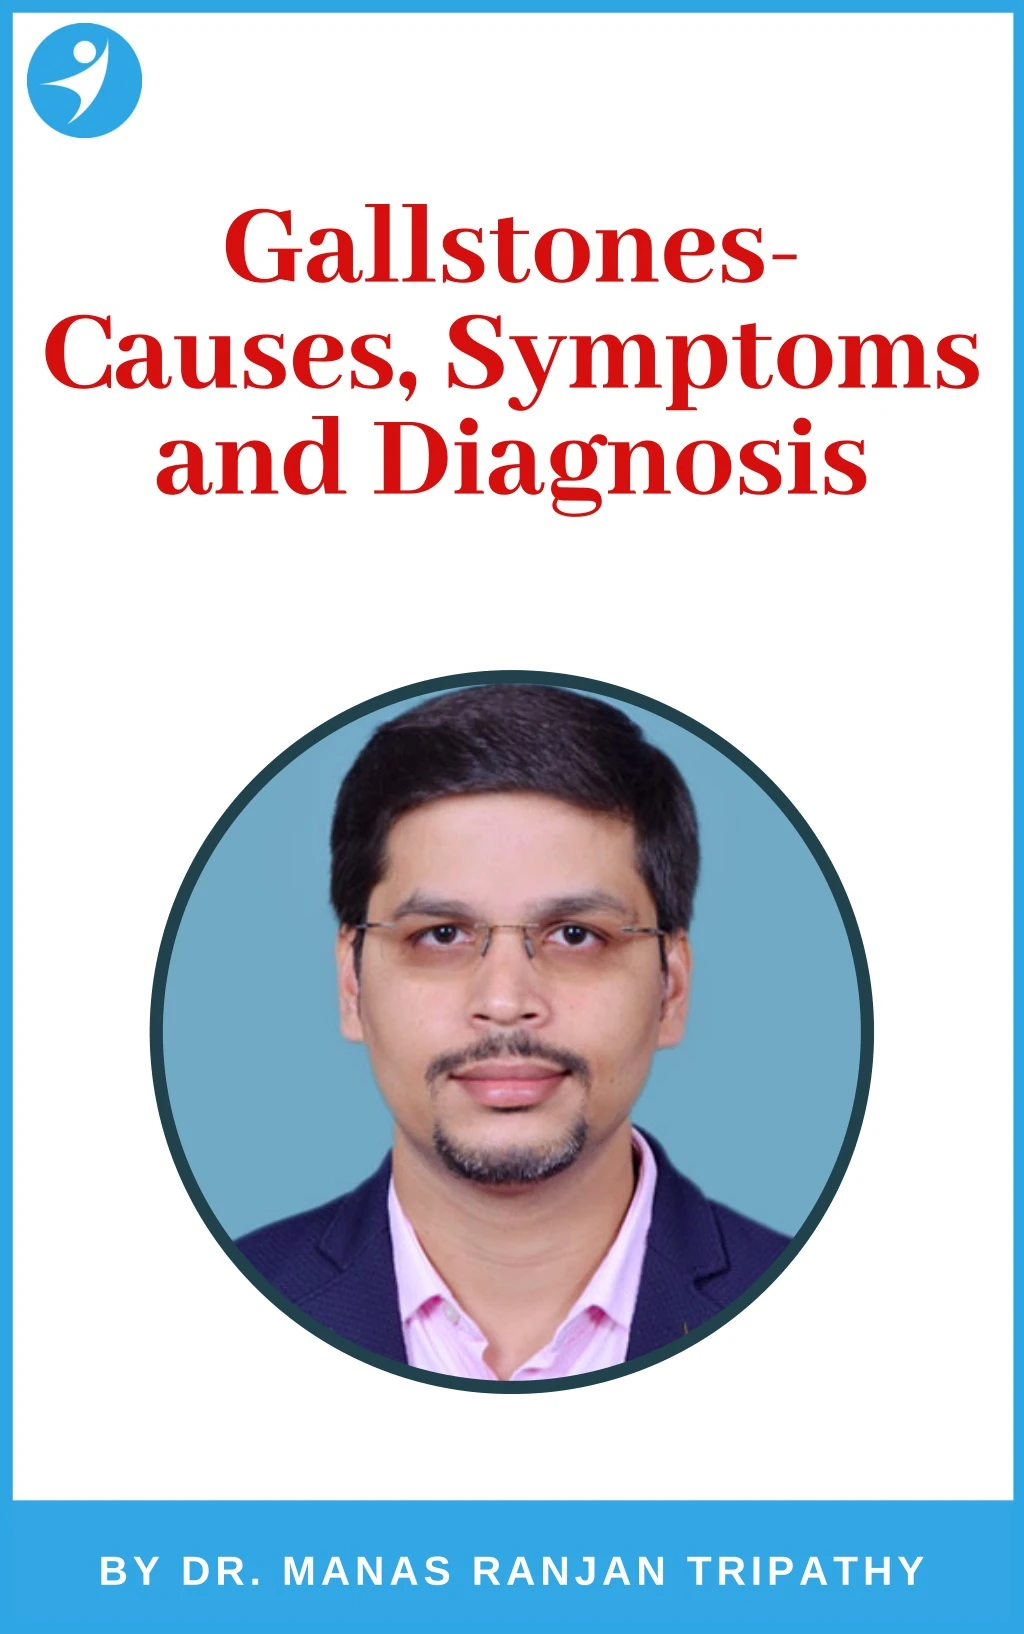 gallstones causes symptoms and diagnosis